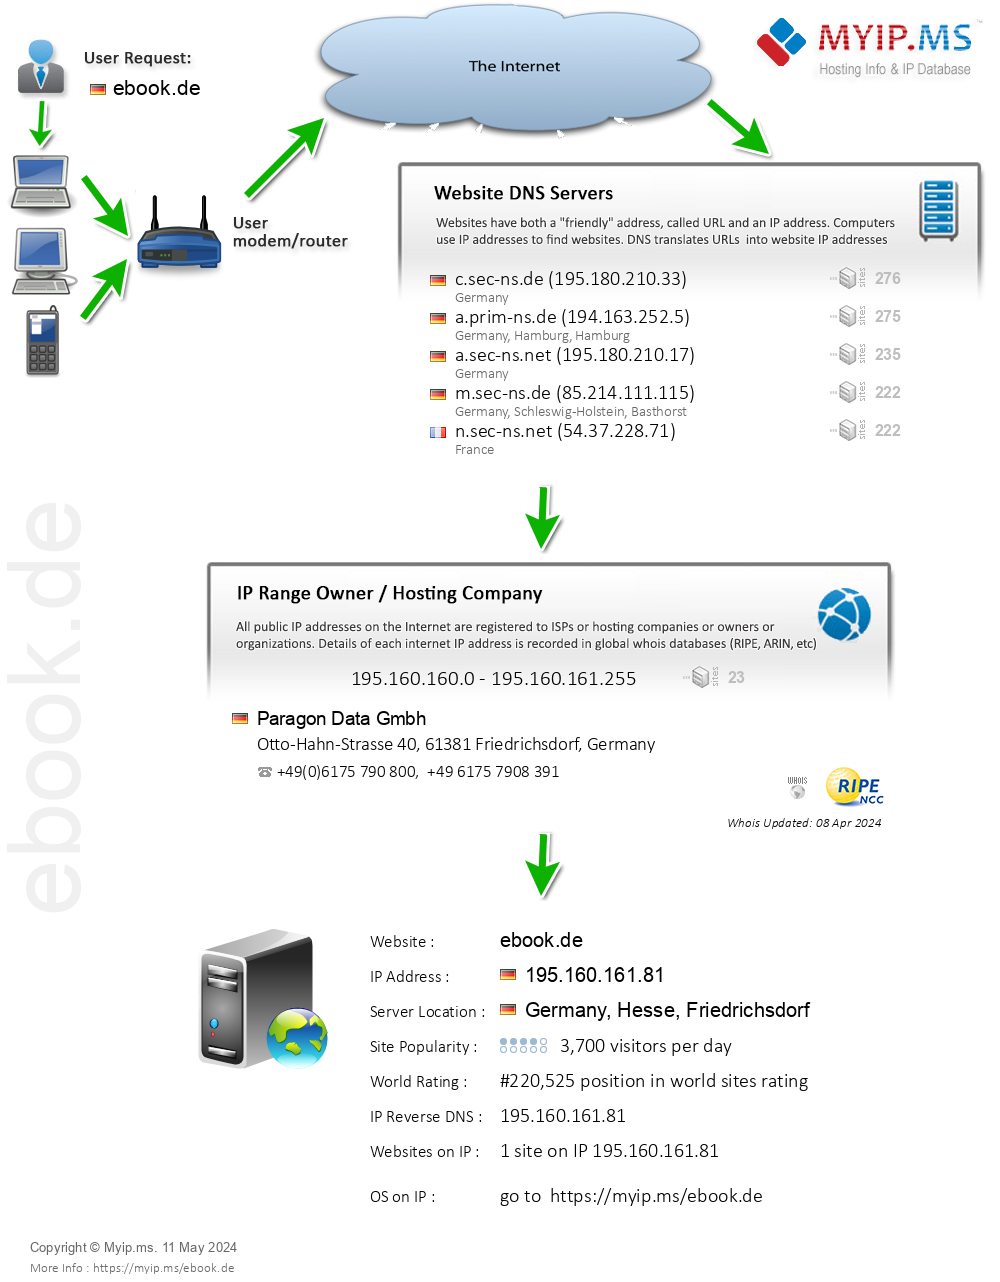 Ebook.de - Website Hosting Visual IP Diagram